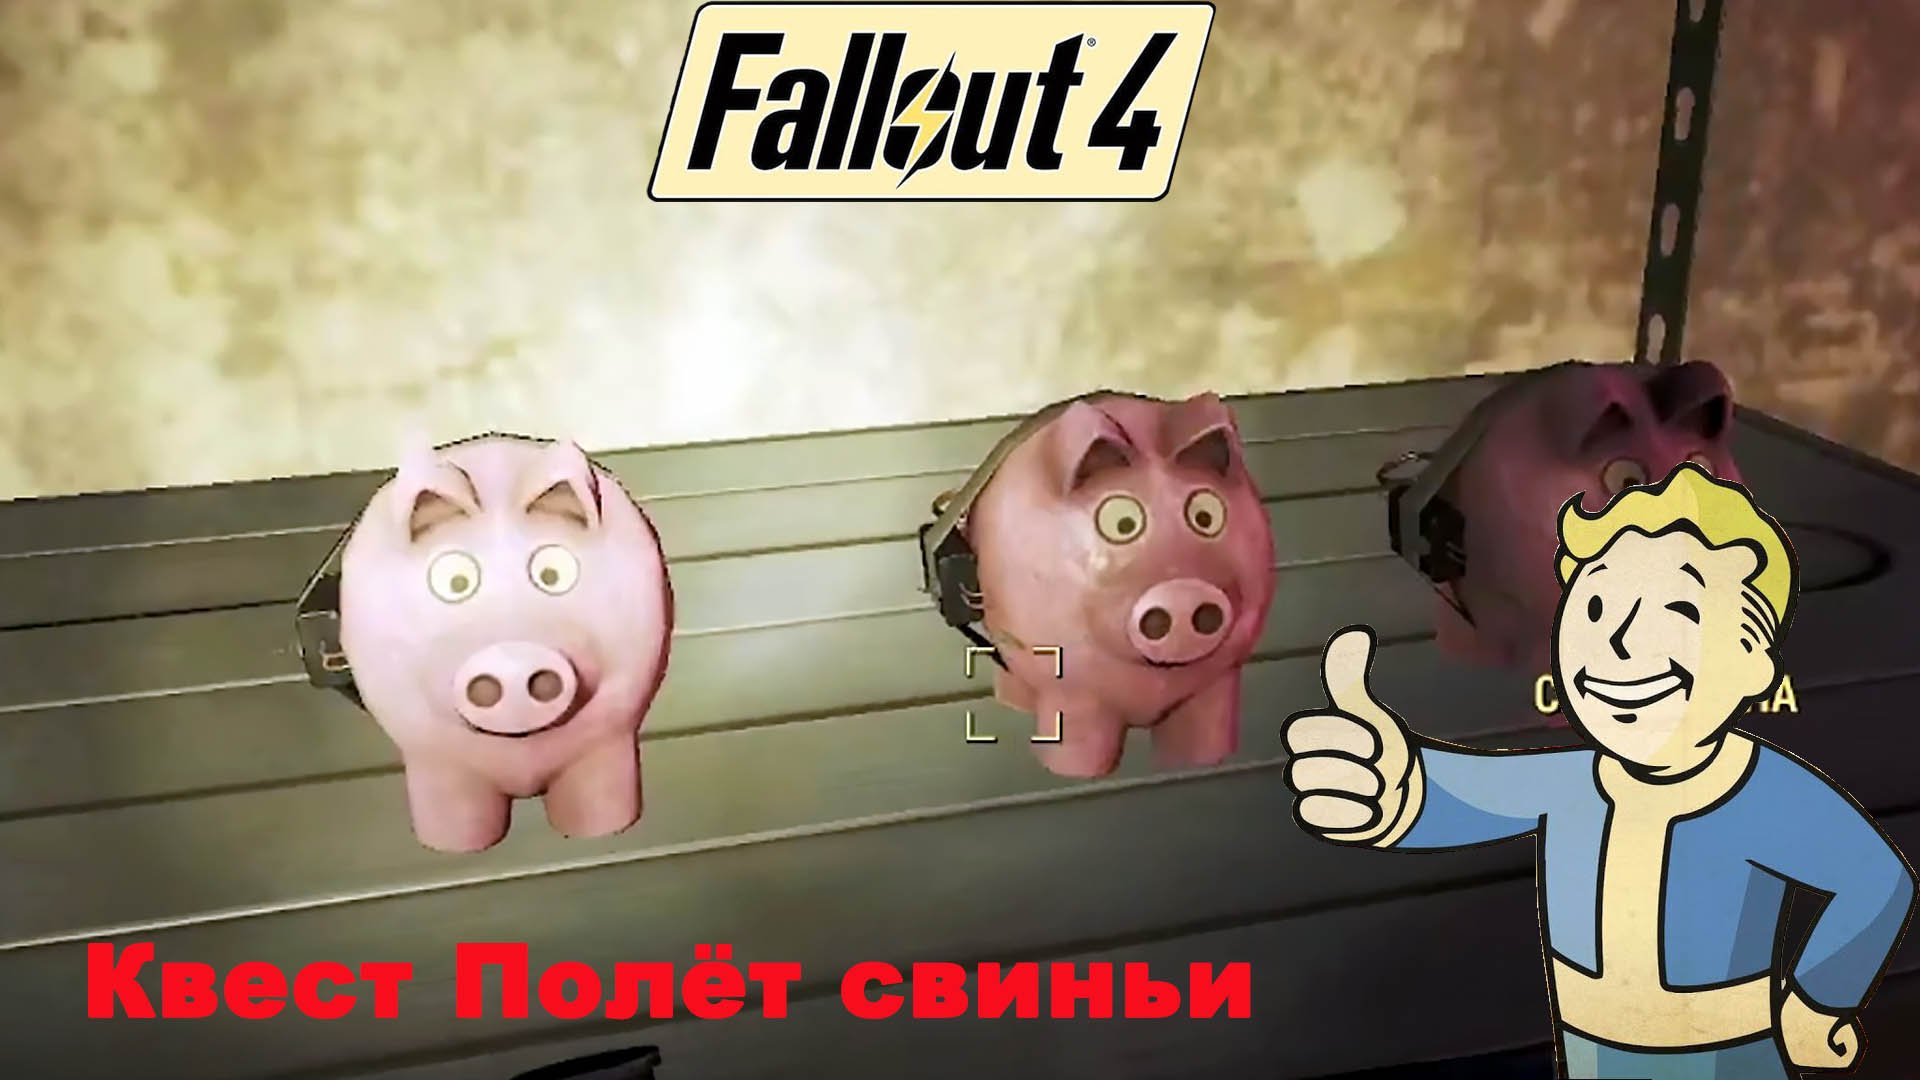 Fallout 4 / Обновление от 25.04.2024 / Квест Полёт свиньи